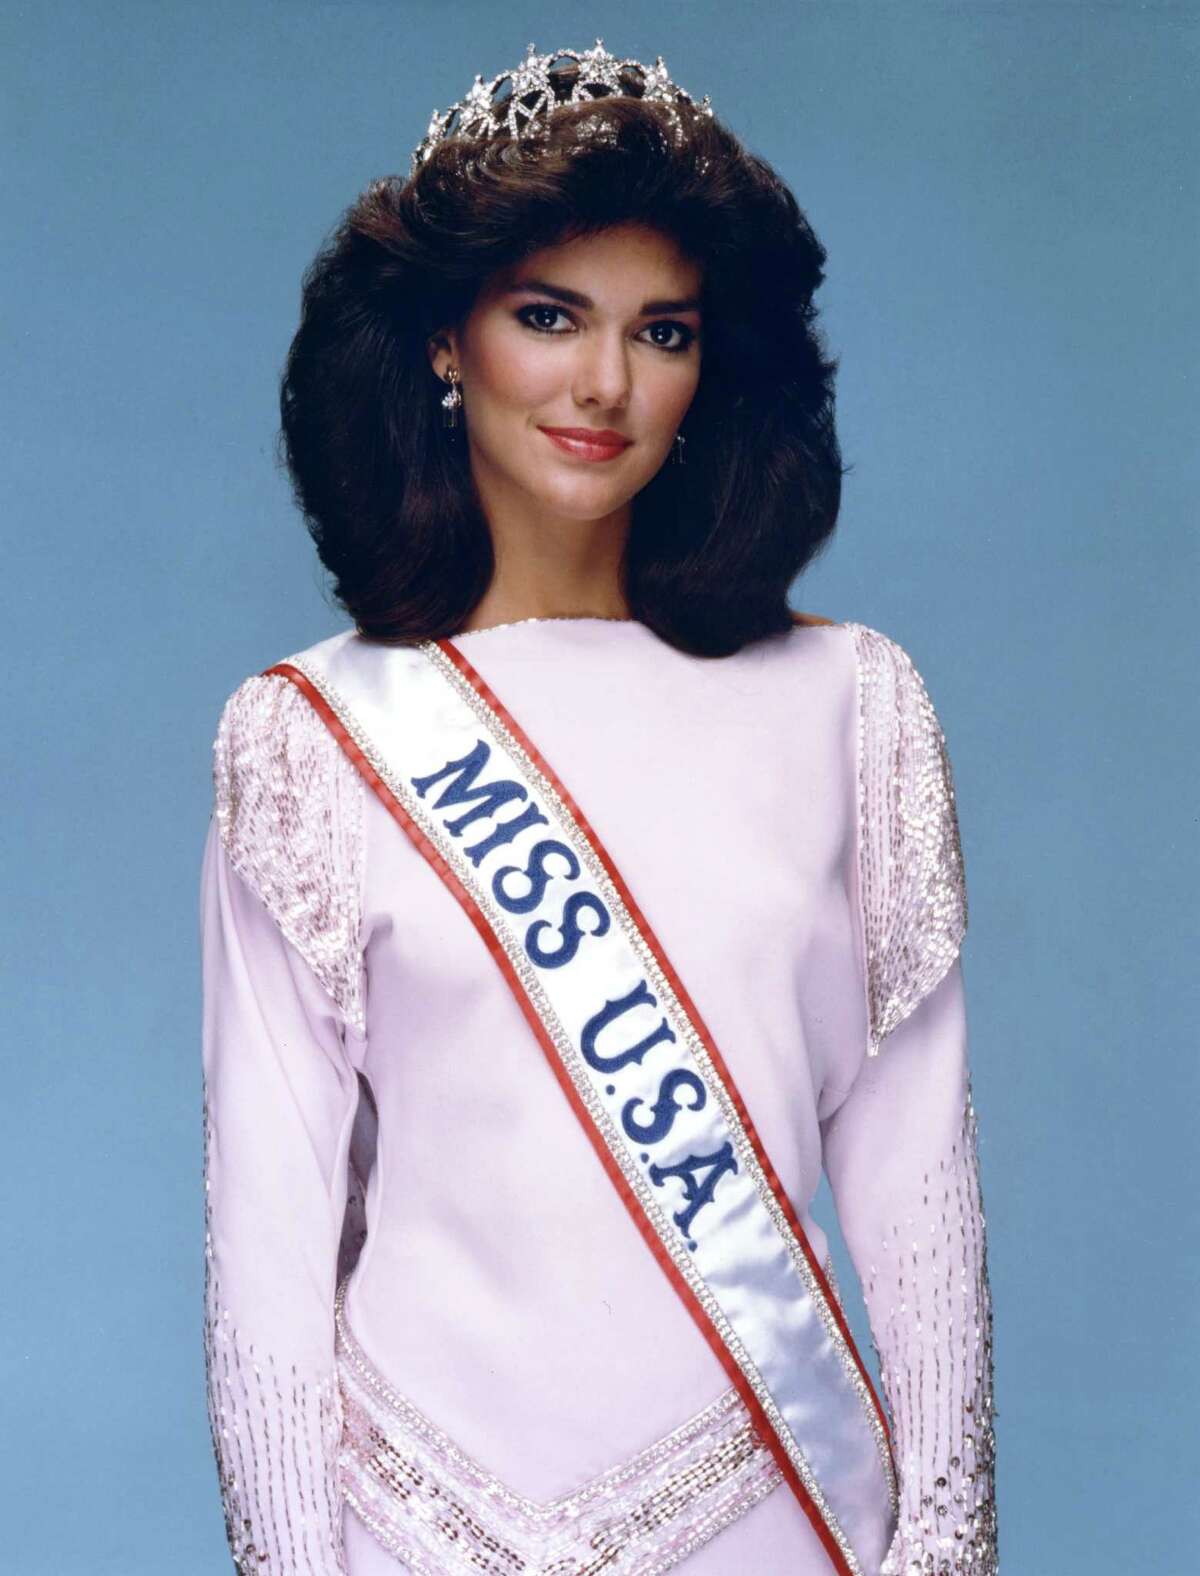 Miss Usa Winners Through The Years 